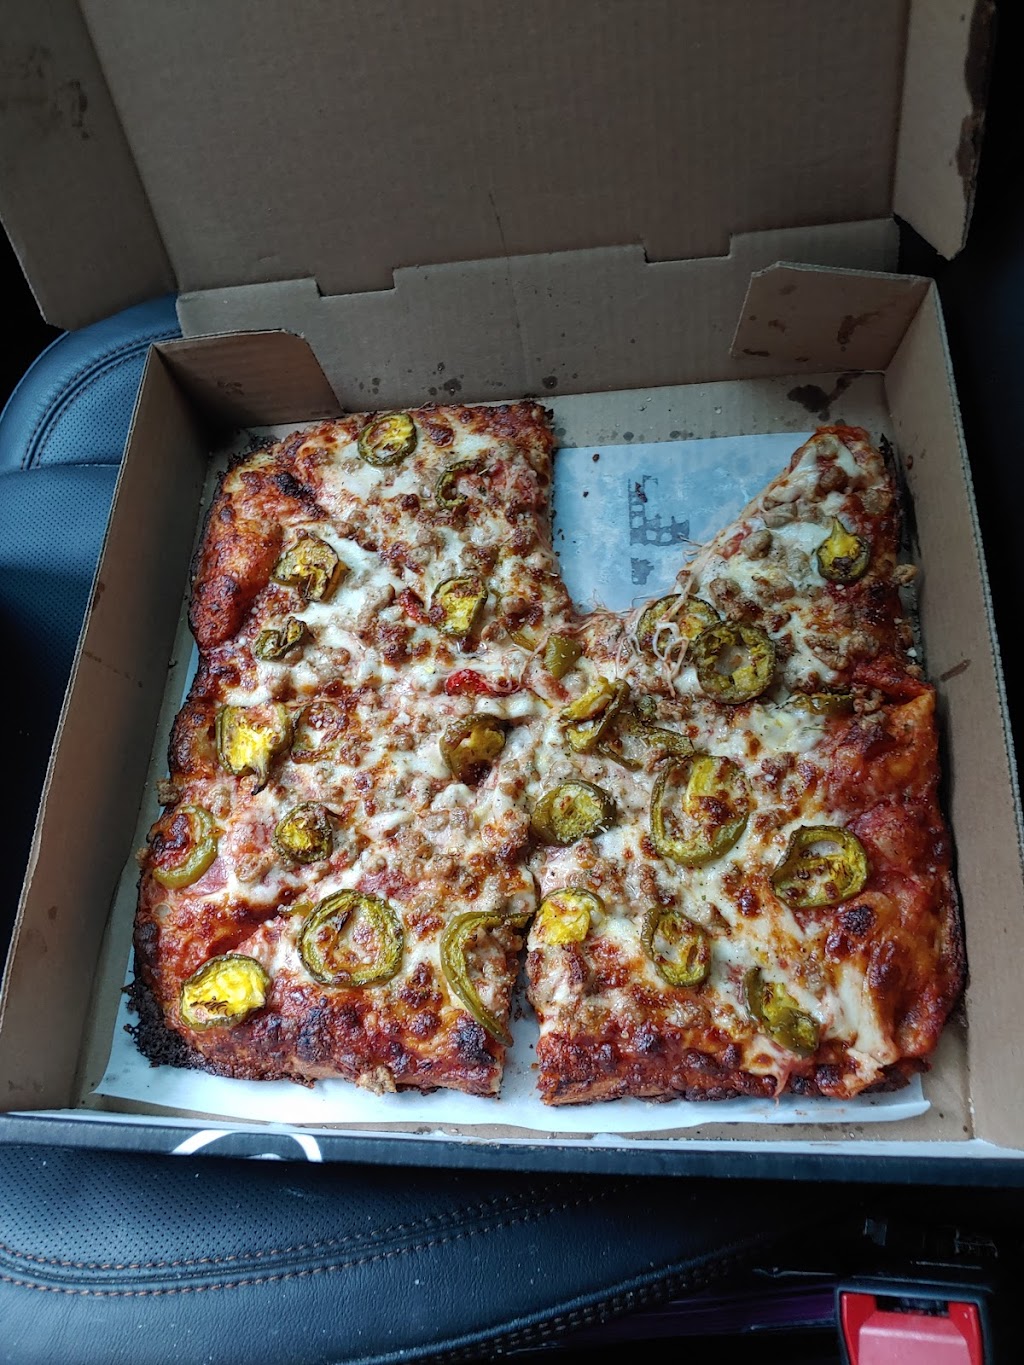 Picassos Pizza | 4154 McKinley Pkwy, Blasdell, NY 14219, USA | Phone: (716) 202-1313